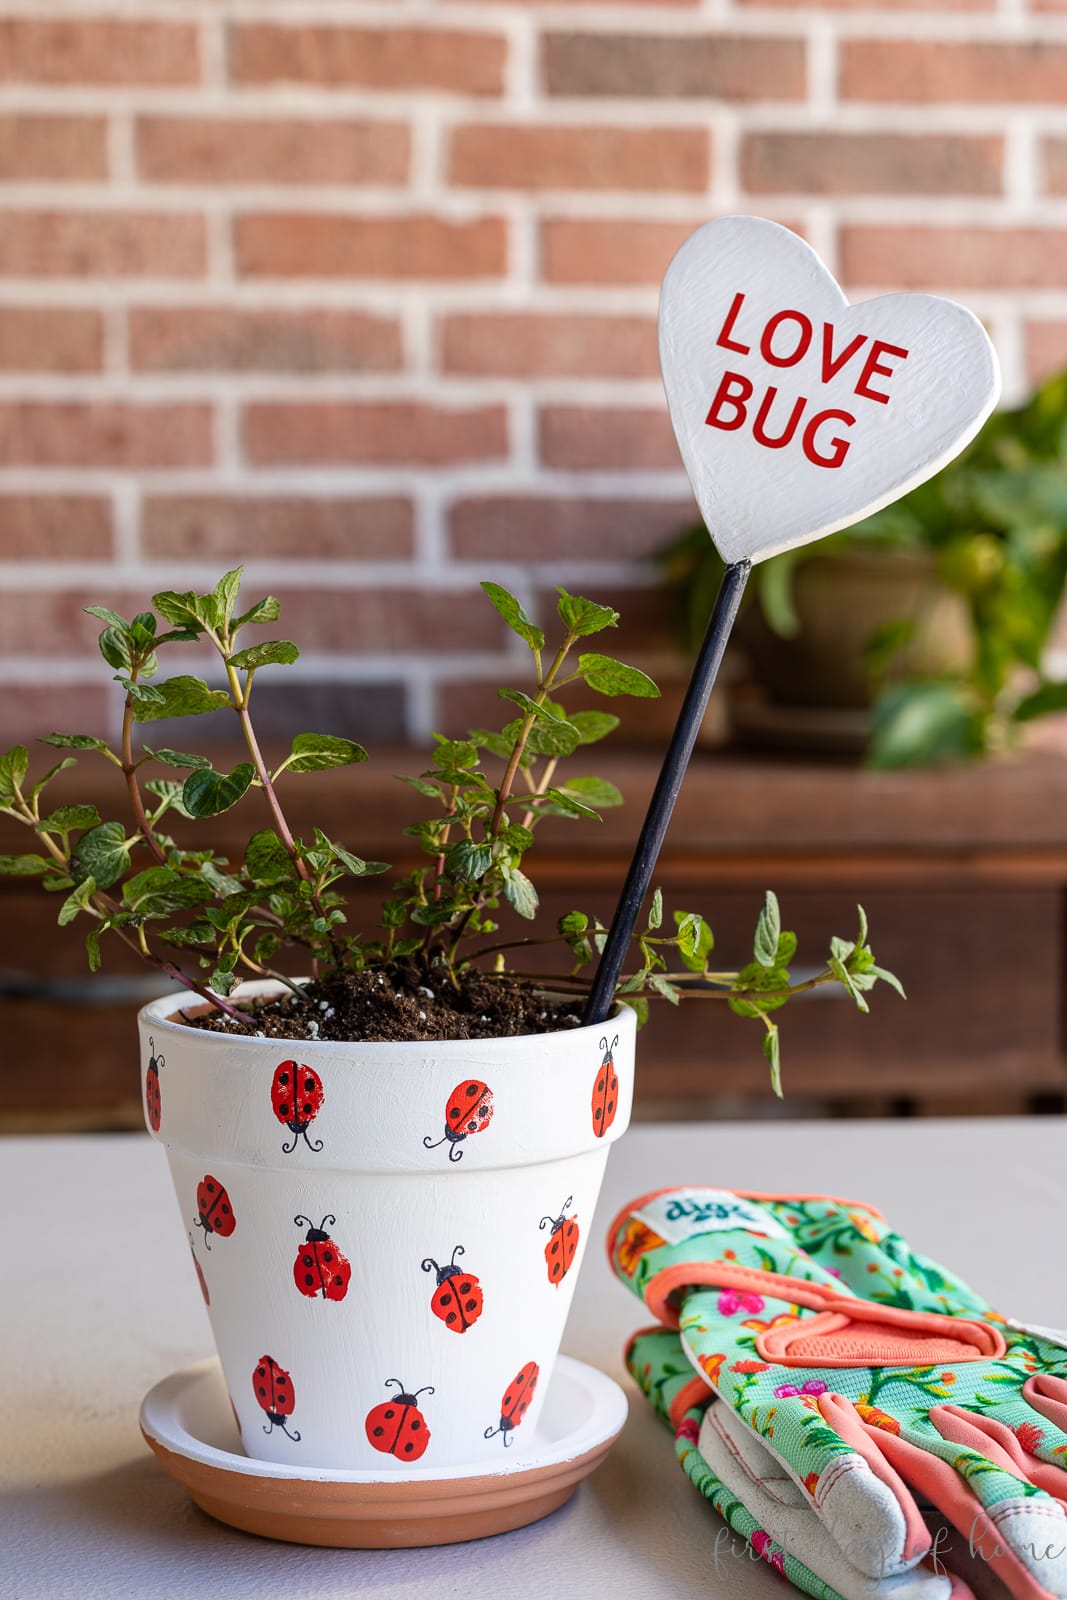 Flower pot with ladybug fingerprint design and garden stake reading "Love Bug" shown with gardening gloves.